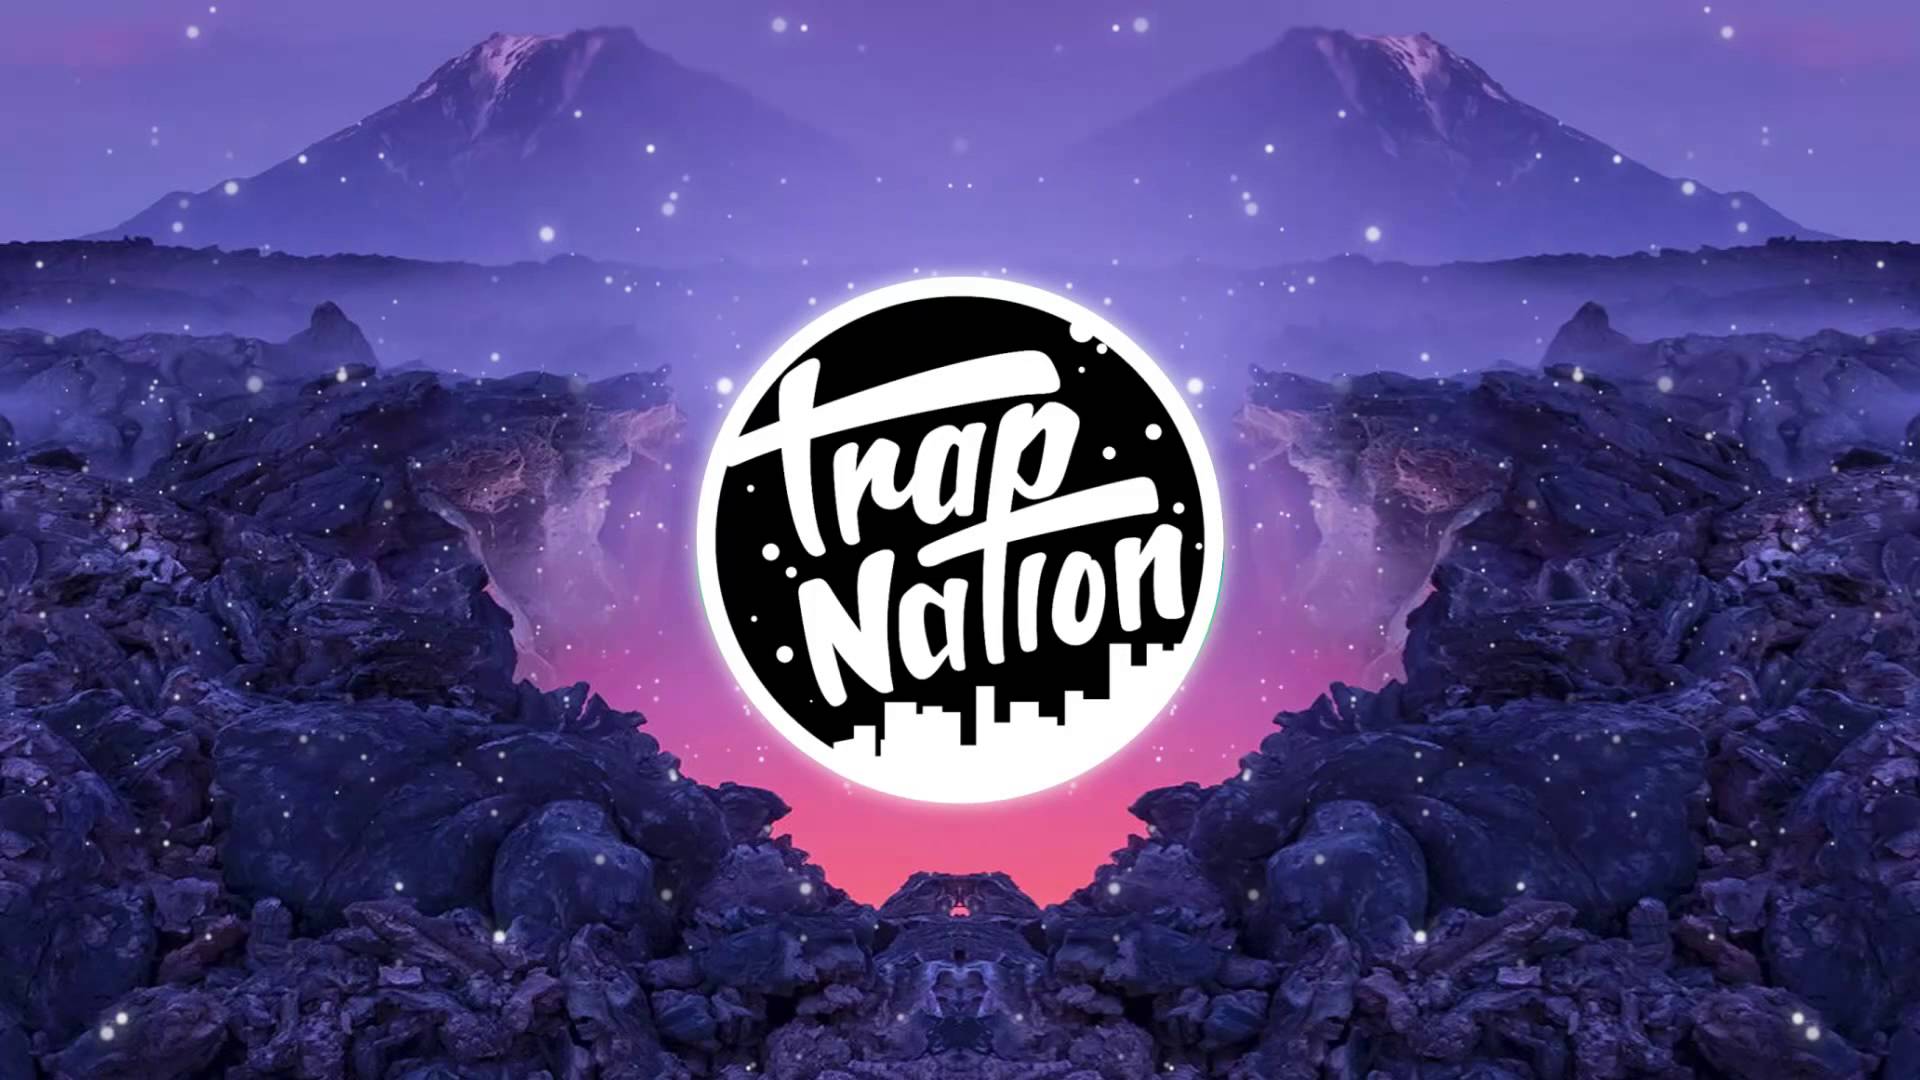 Amothole remix. Trap Nation. Фон для Trap Nation. Трап. Шапка Trap Nation.